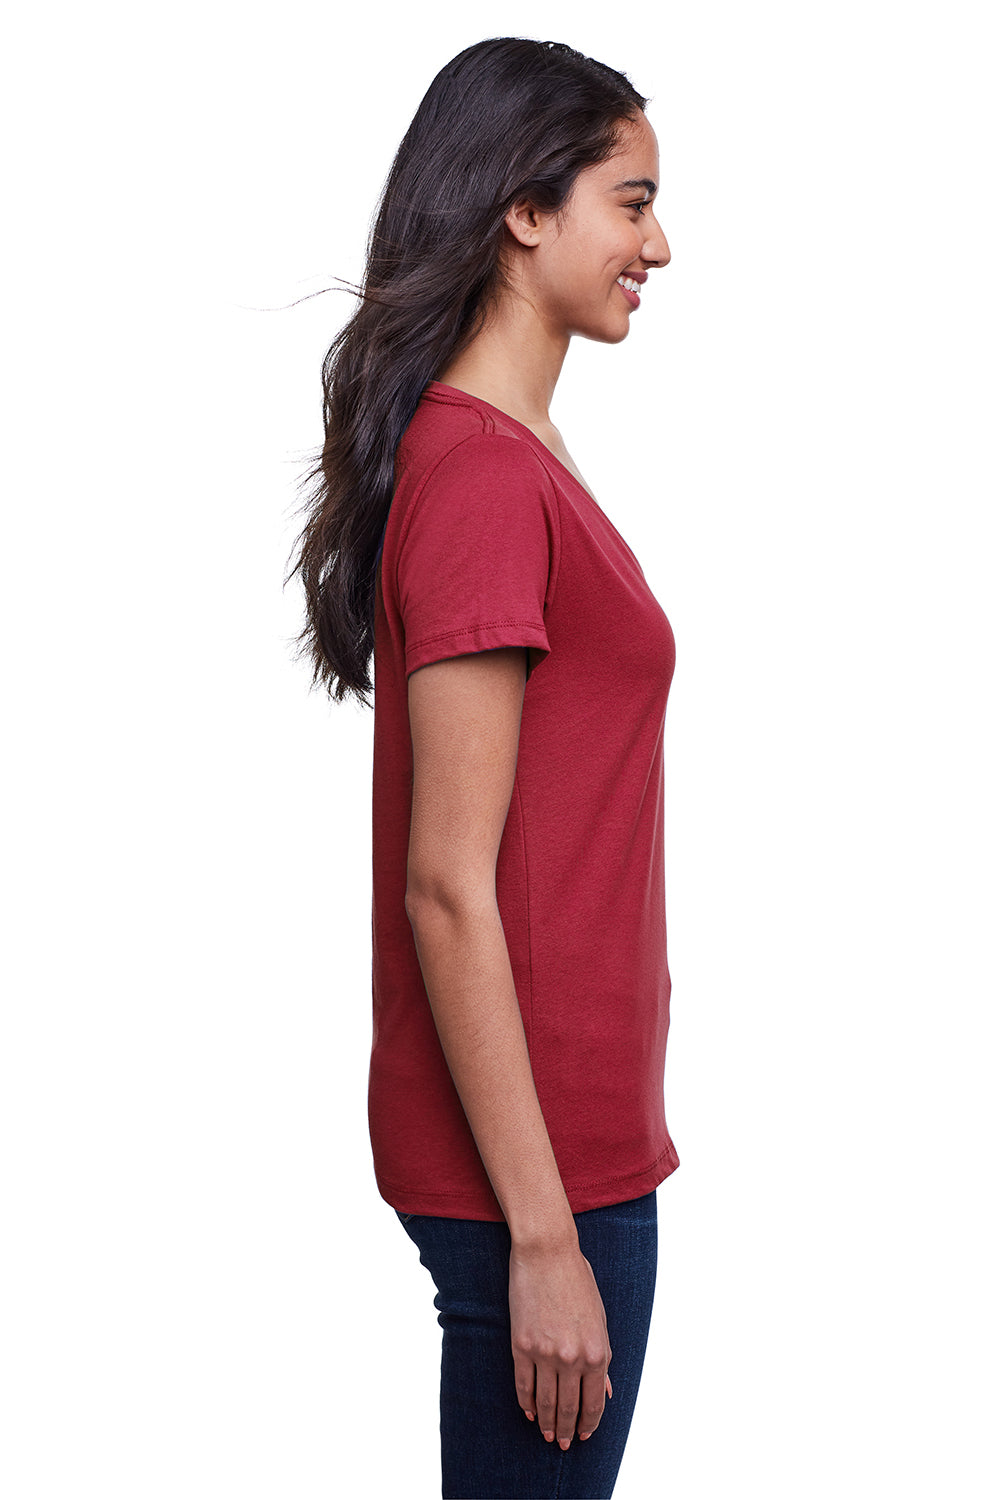 Next Level N4240 Womens Eco Performance Moisture Wicking Short Sleeve V-Neck T-Shirt Cardinal Red Side